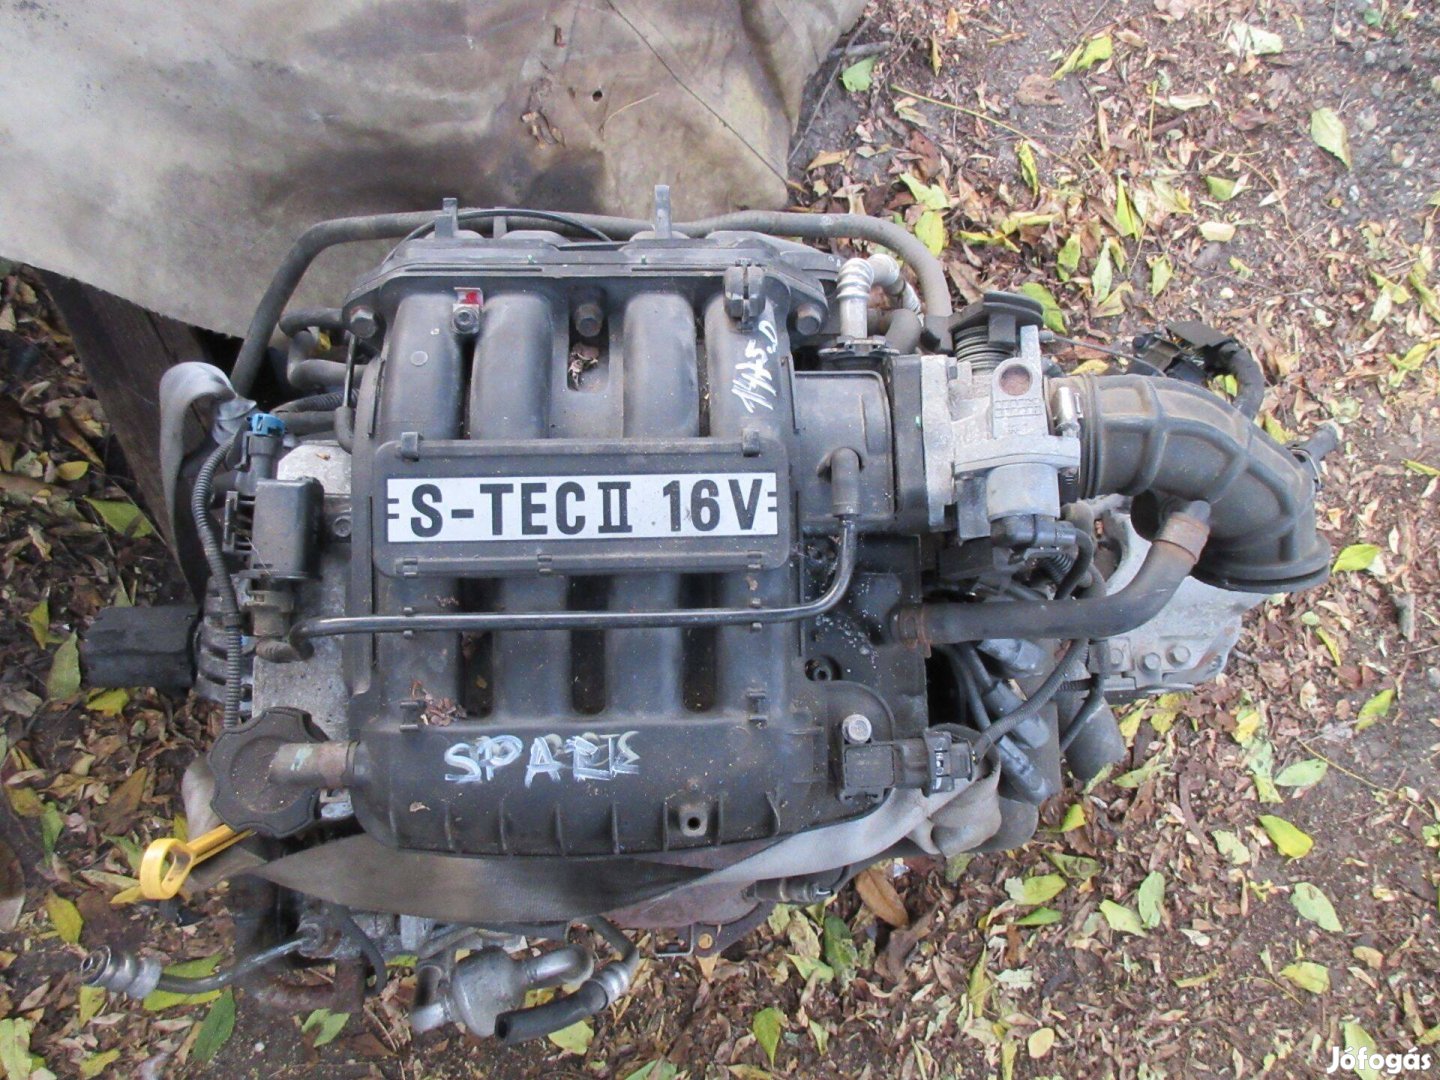 Chevrolet Spark 1.2 S-TEC II 16 V motor